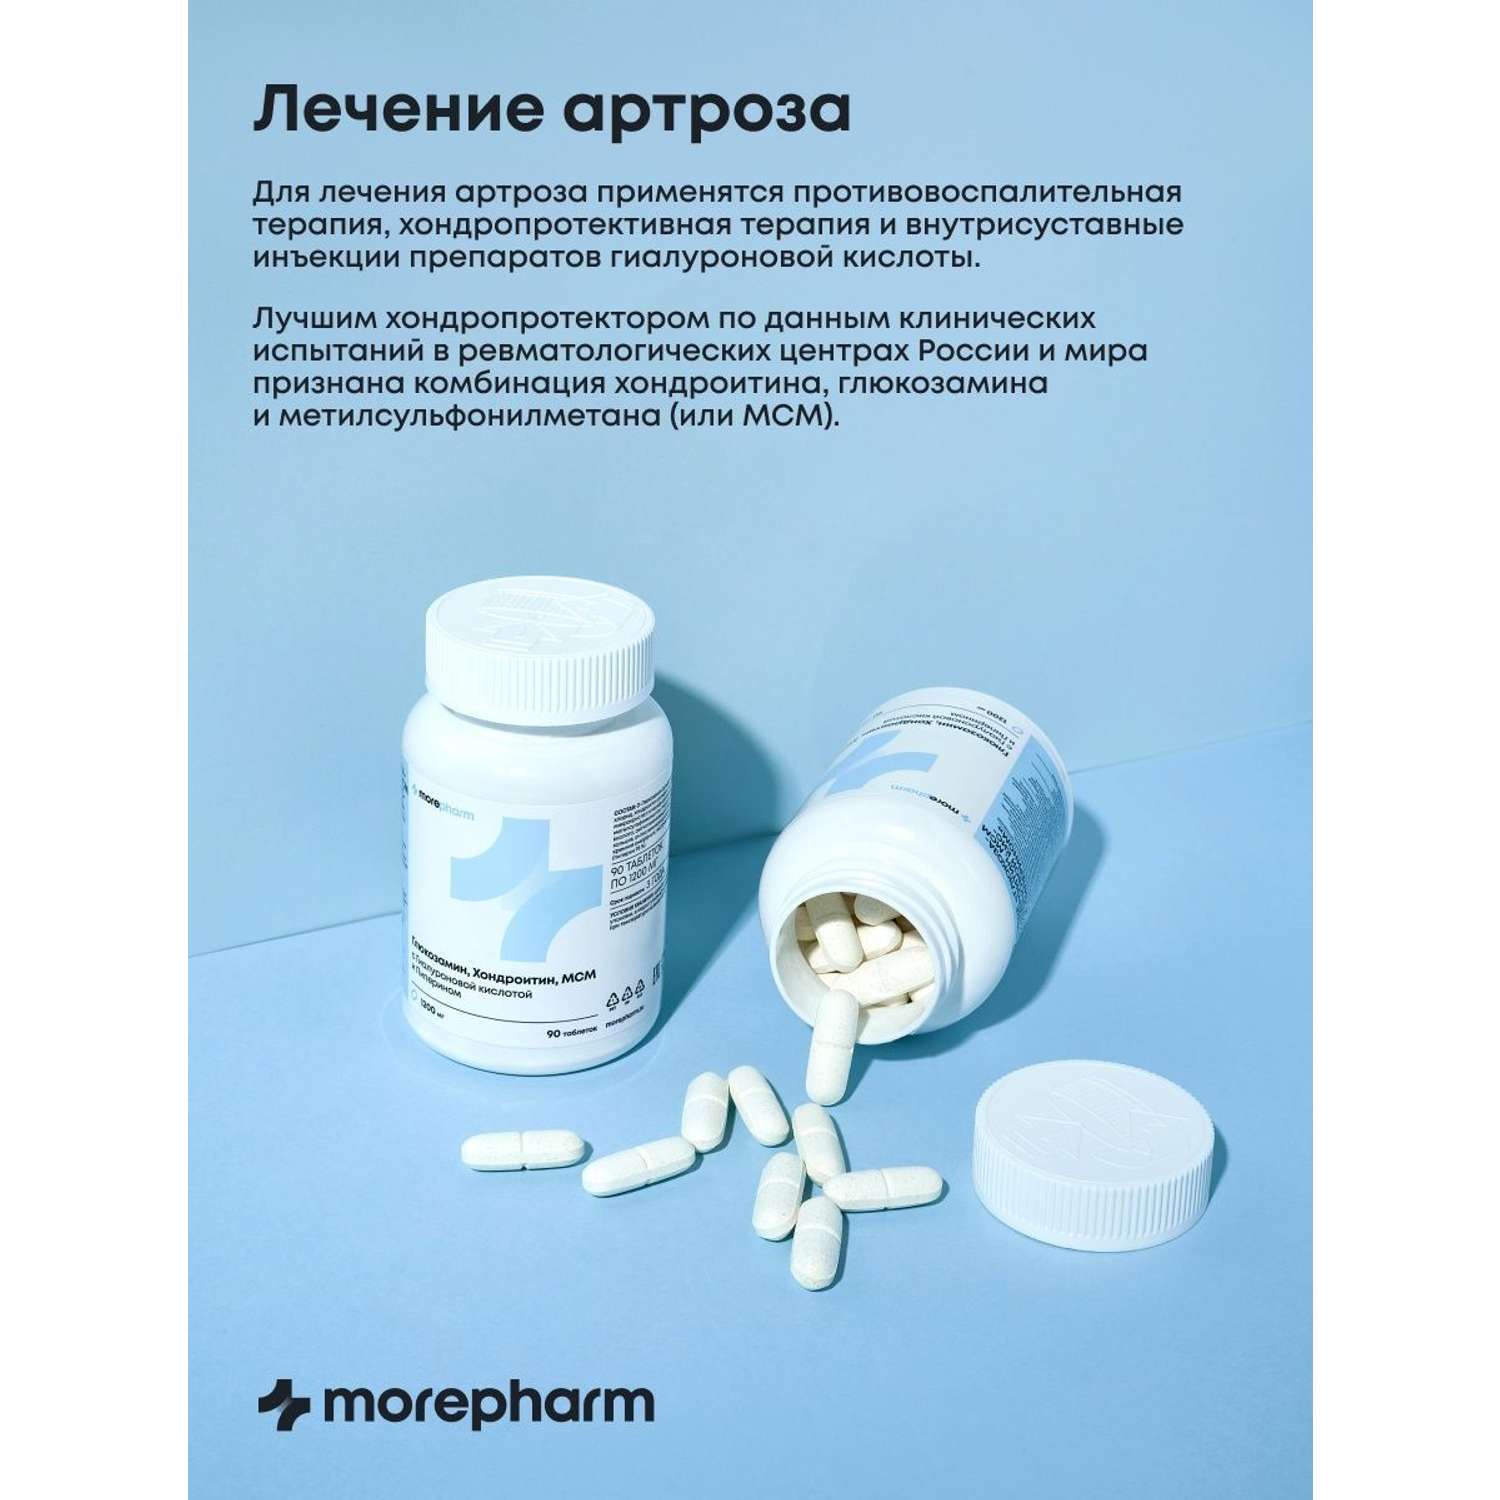 БАД morepharm Глюкозамин хондроитин с MCM добавка для суставов и связок - фото 5